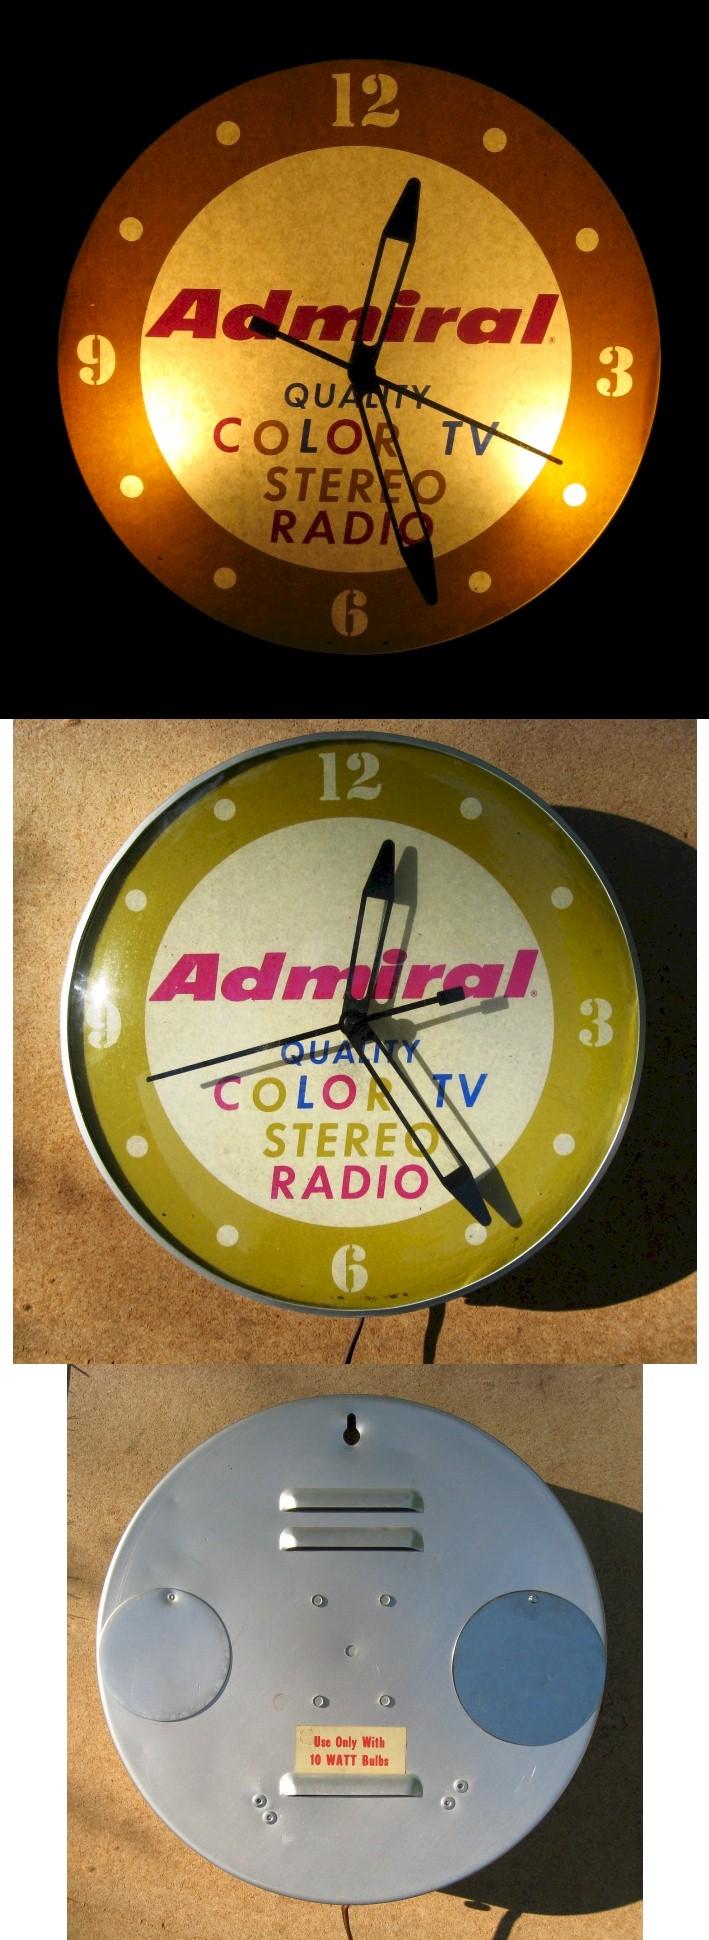 Admiral Radio-TV-Stereo Advertising Clock